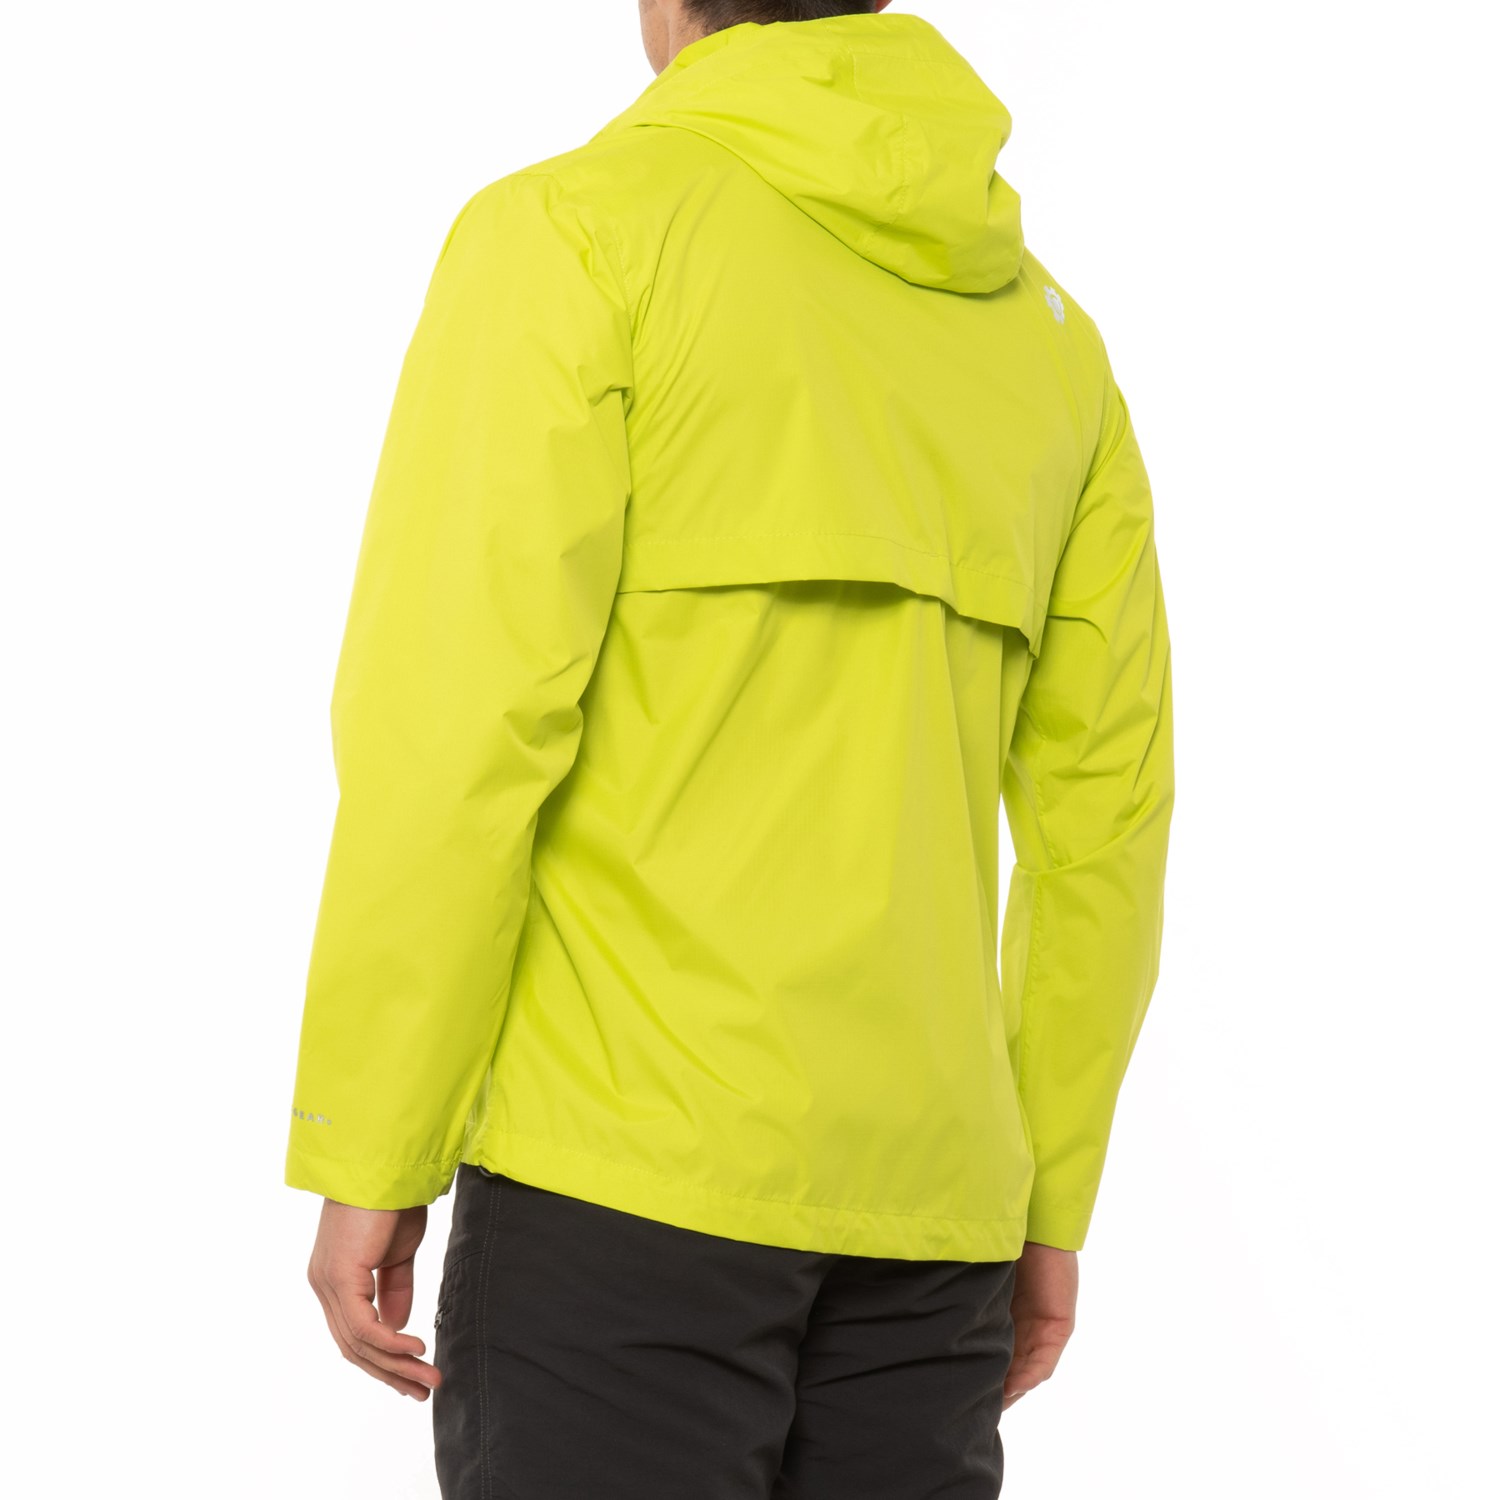 Boulder Gear Stratus Rain Jacket (For Men) - Save 57%